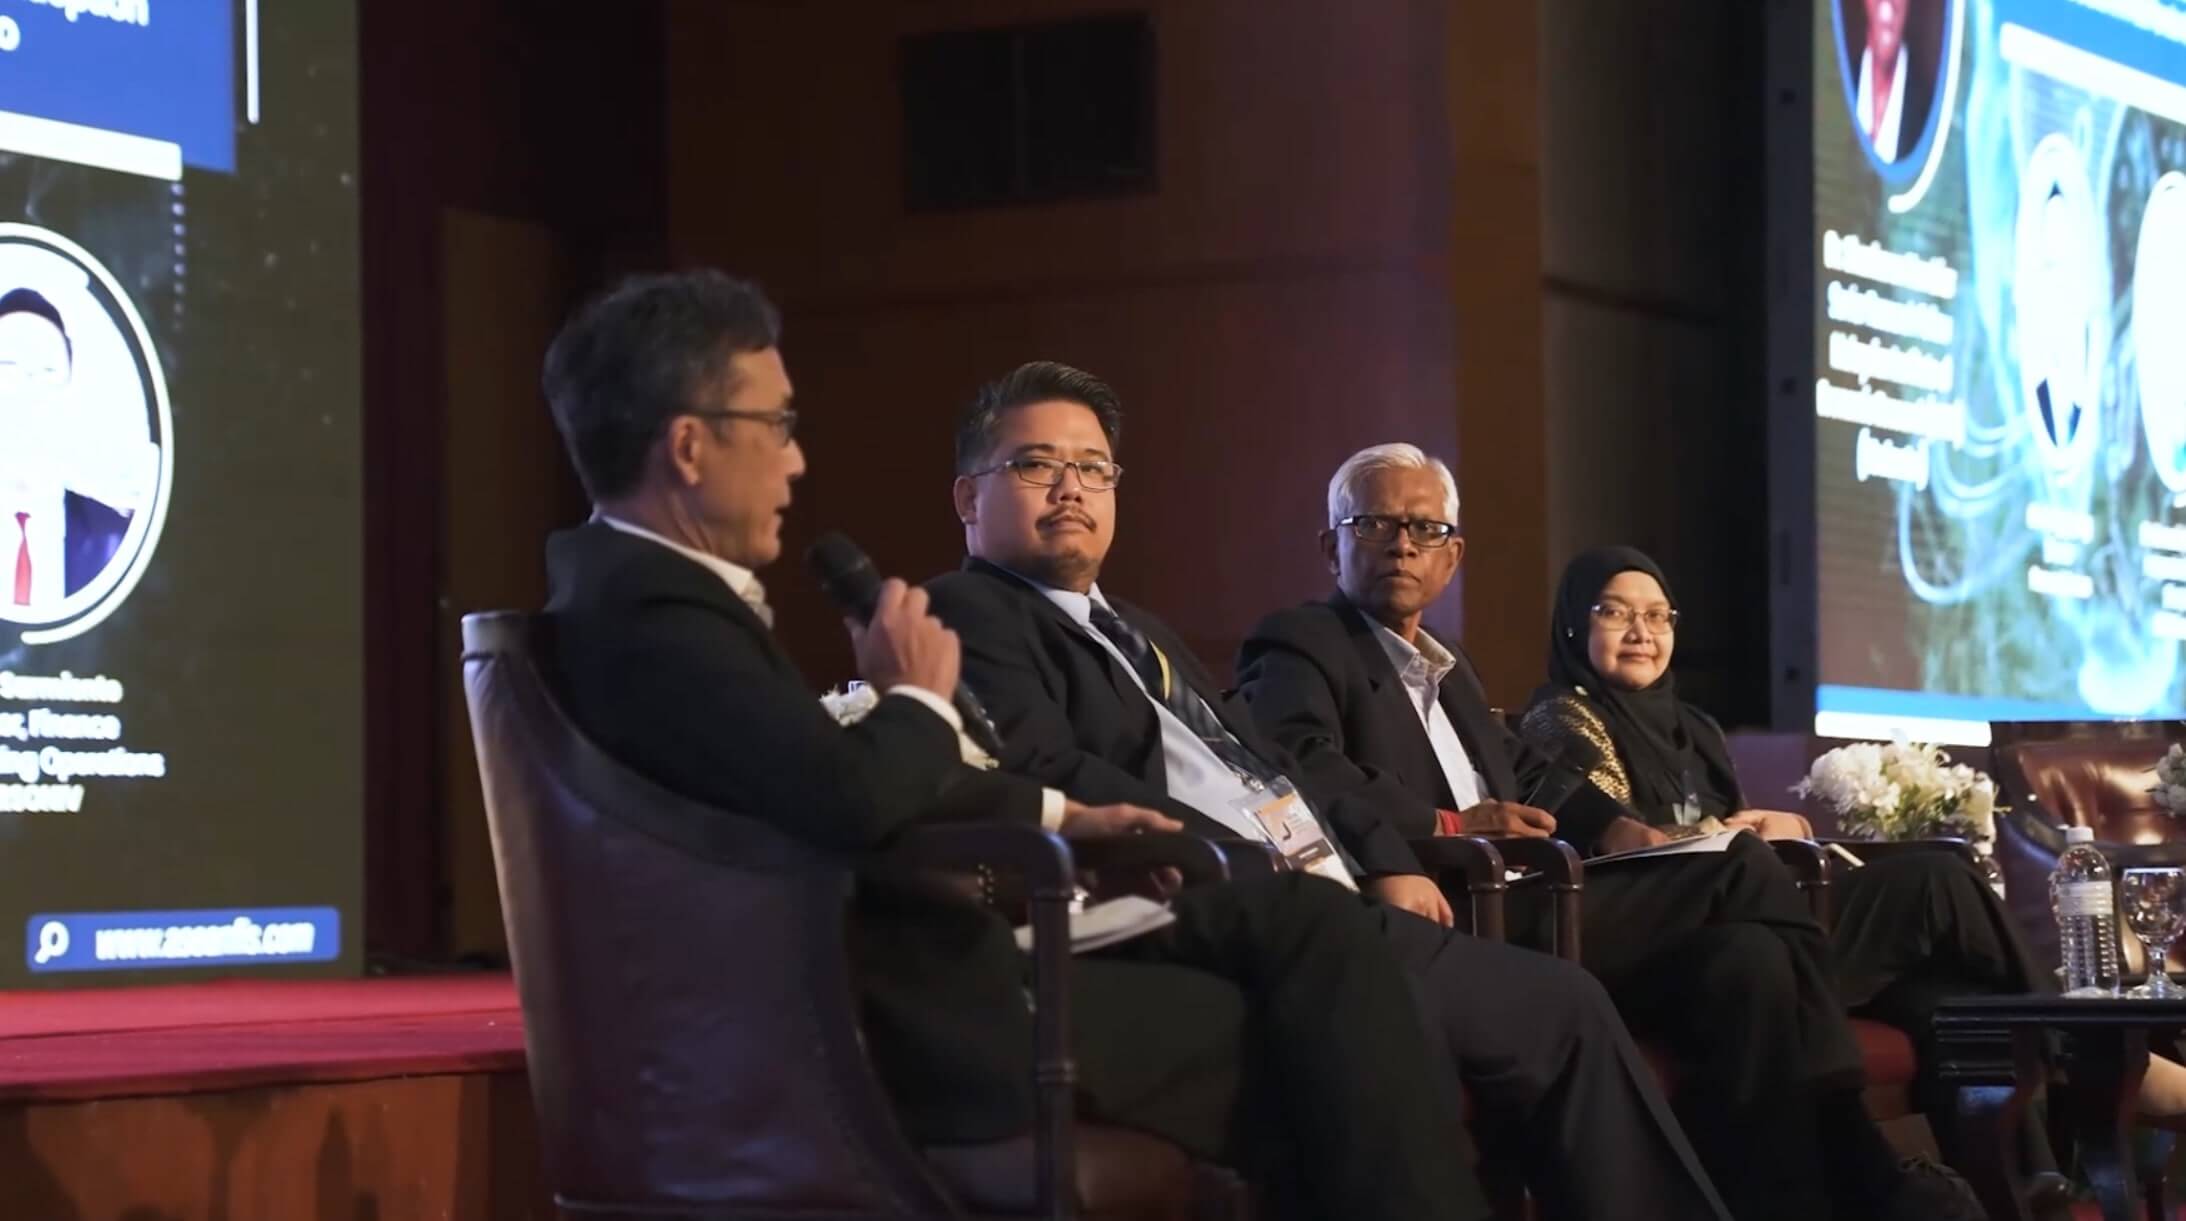 2nd ASEAN Finance Innovation Summit 2024